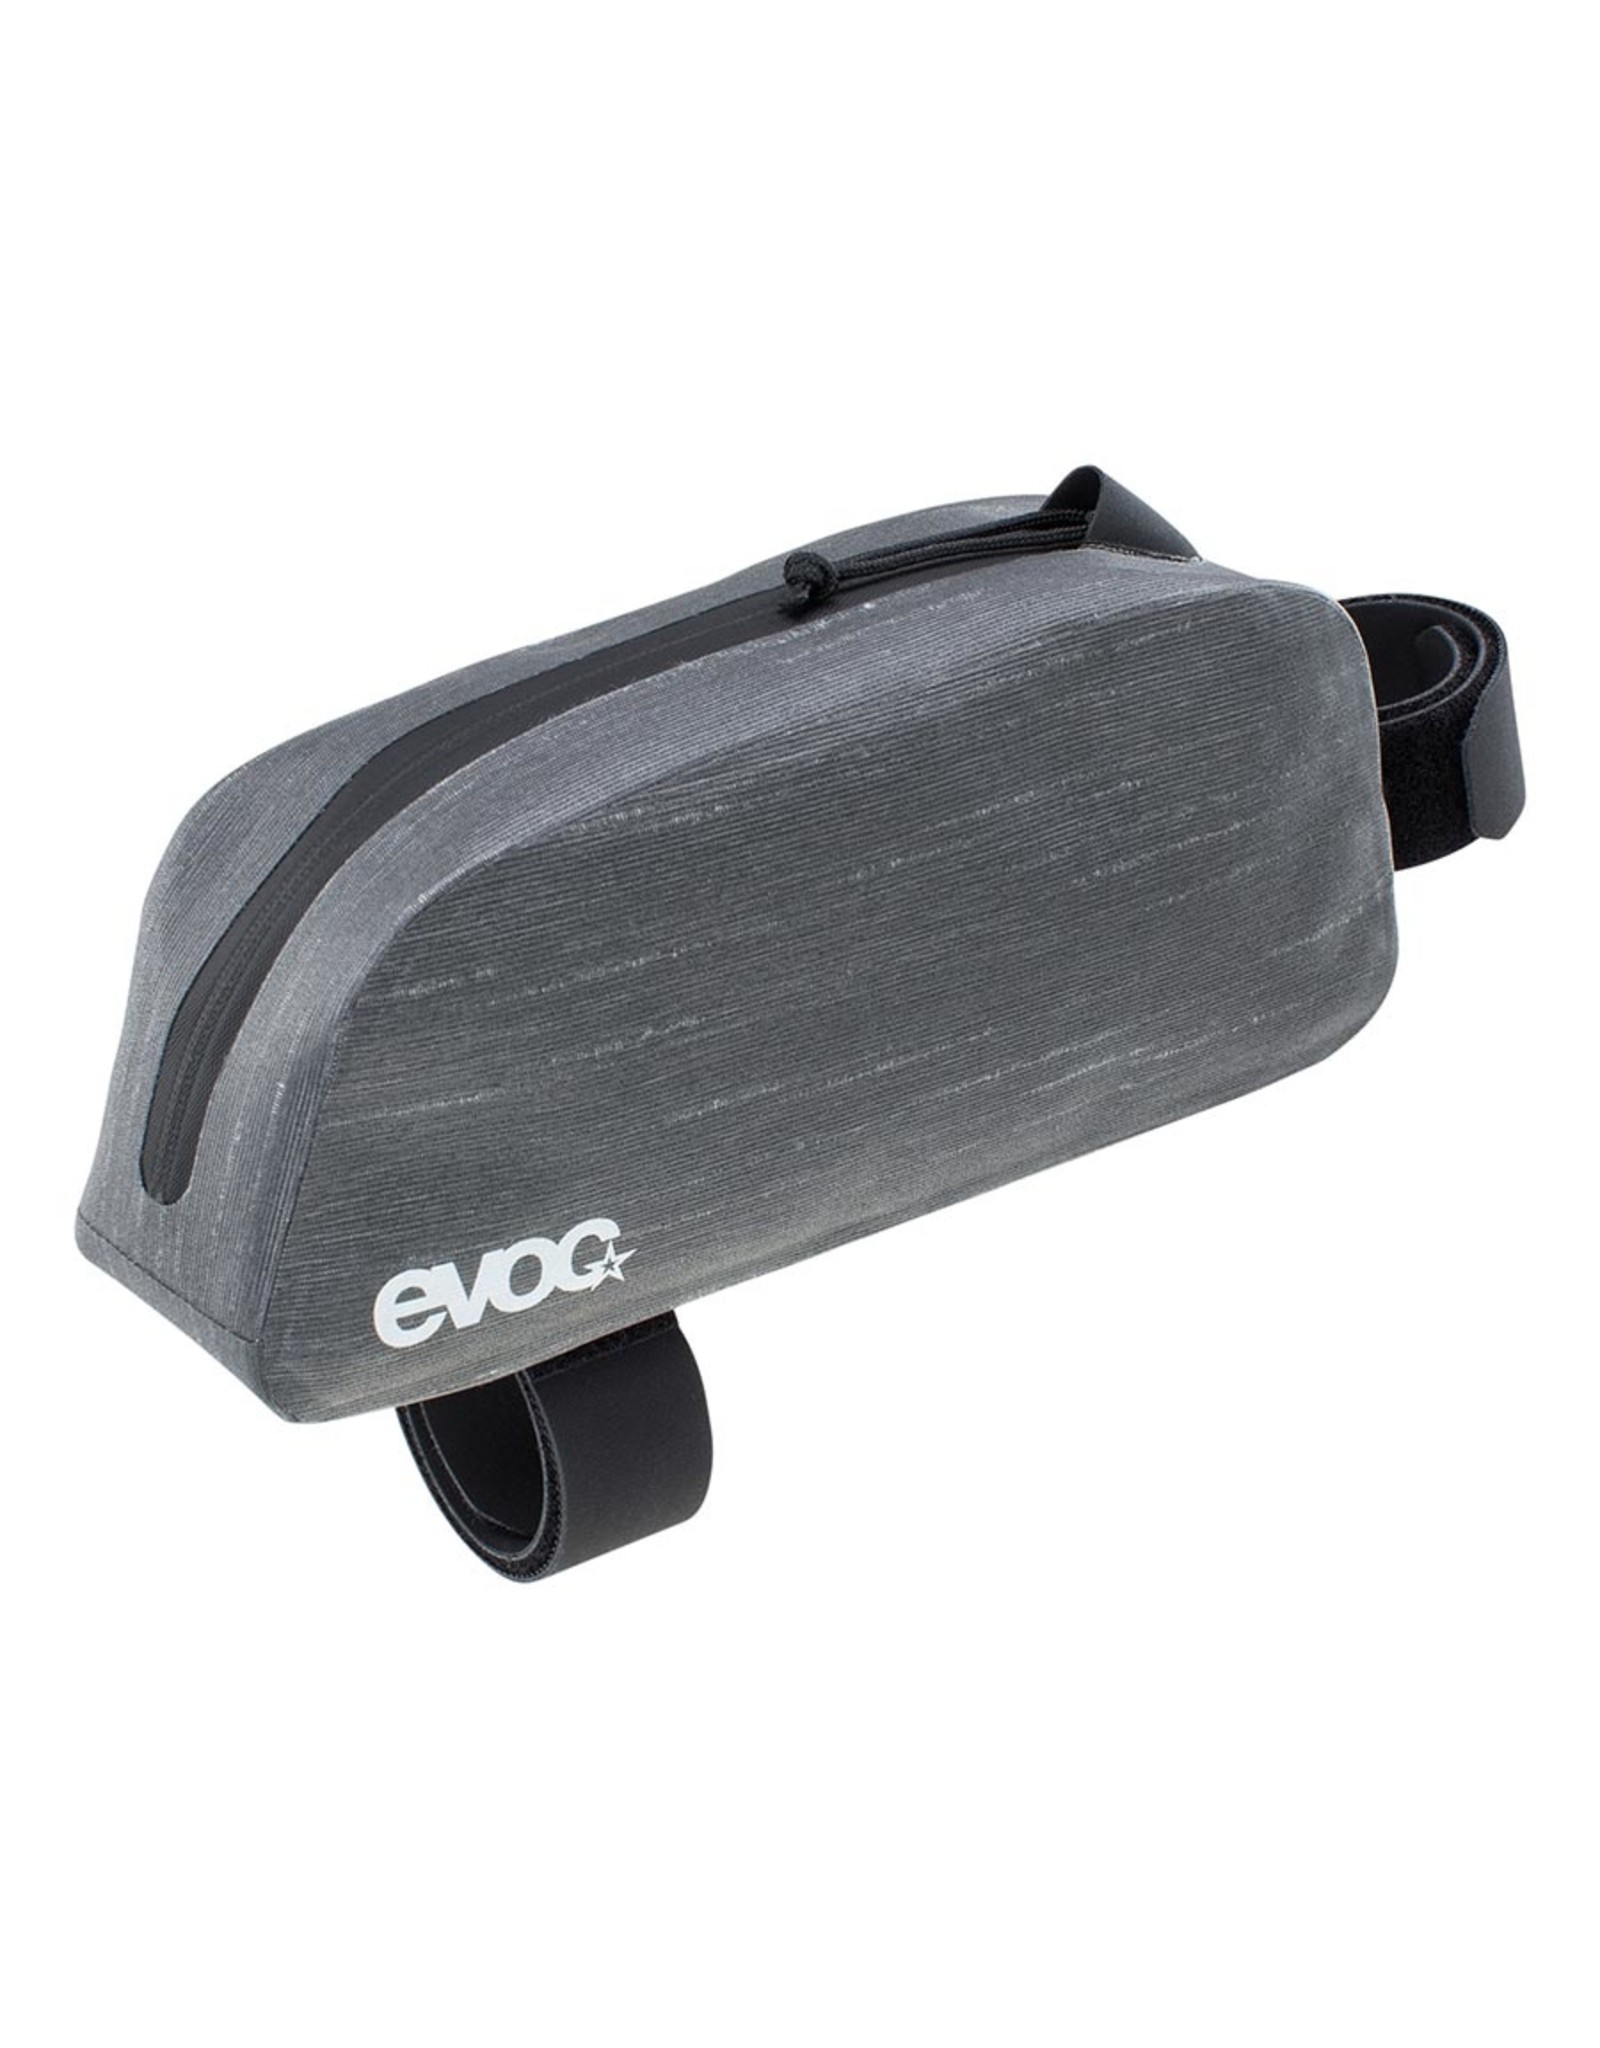 EVOC EVOC Top Tube Pack WP -  0.8L - Carbon Grey